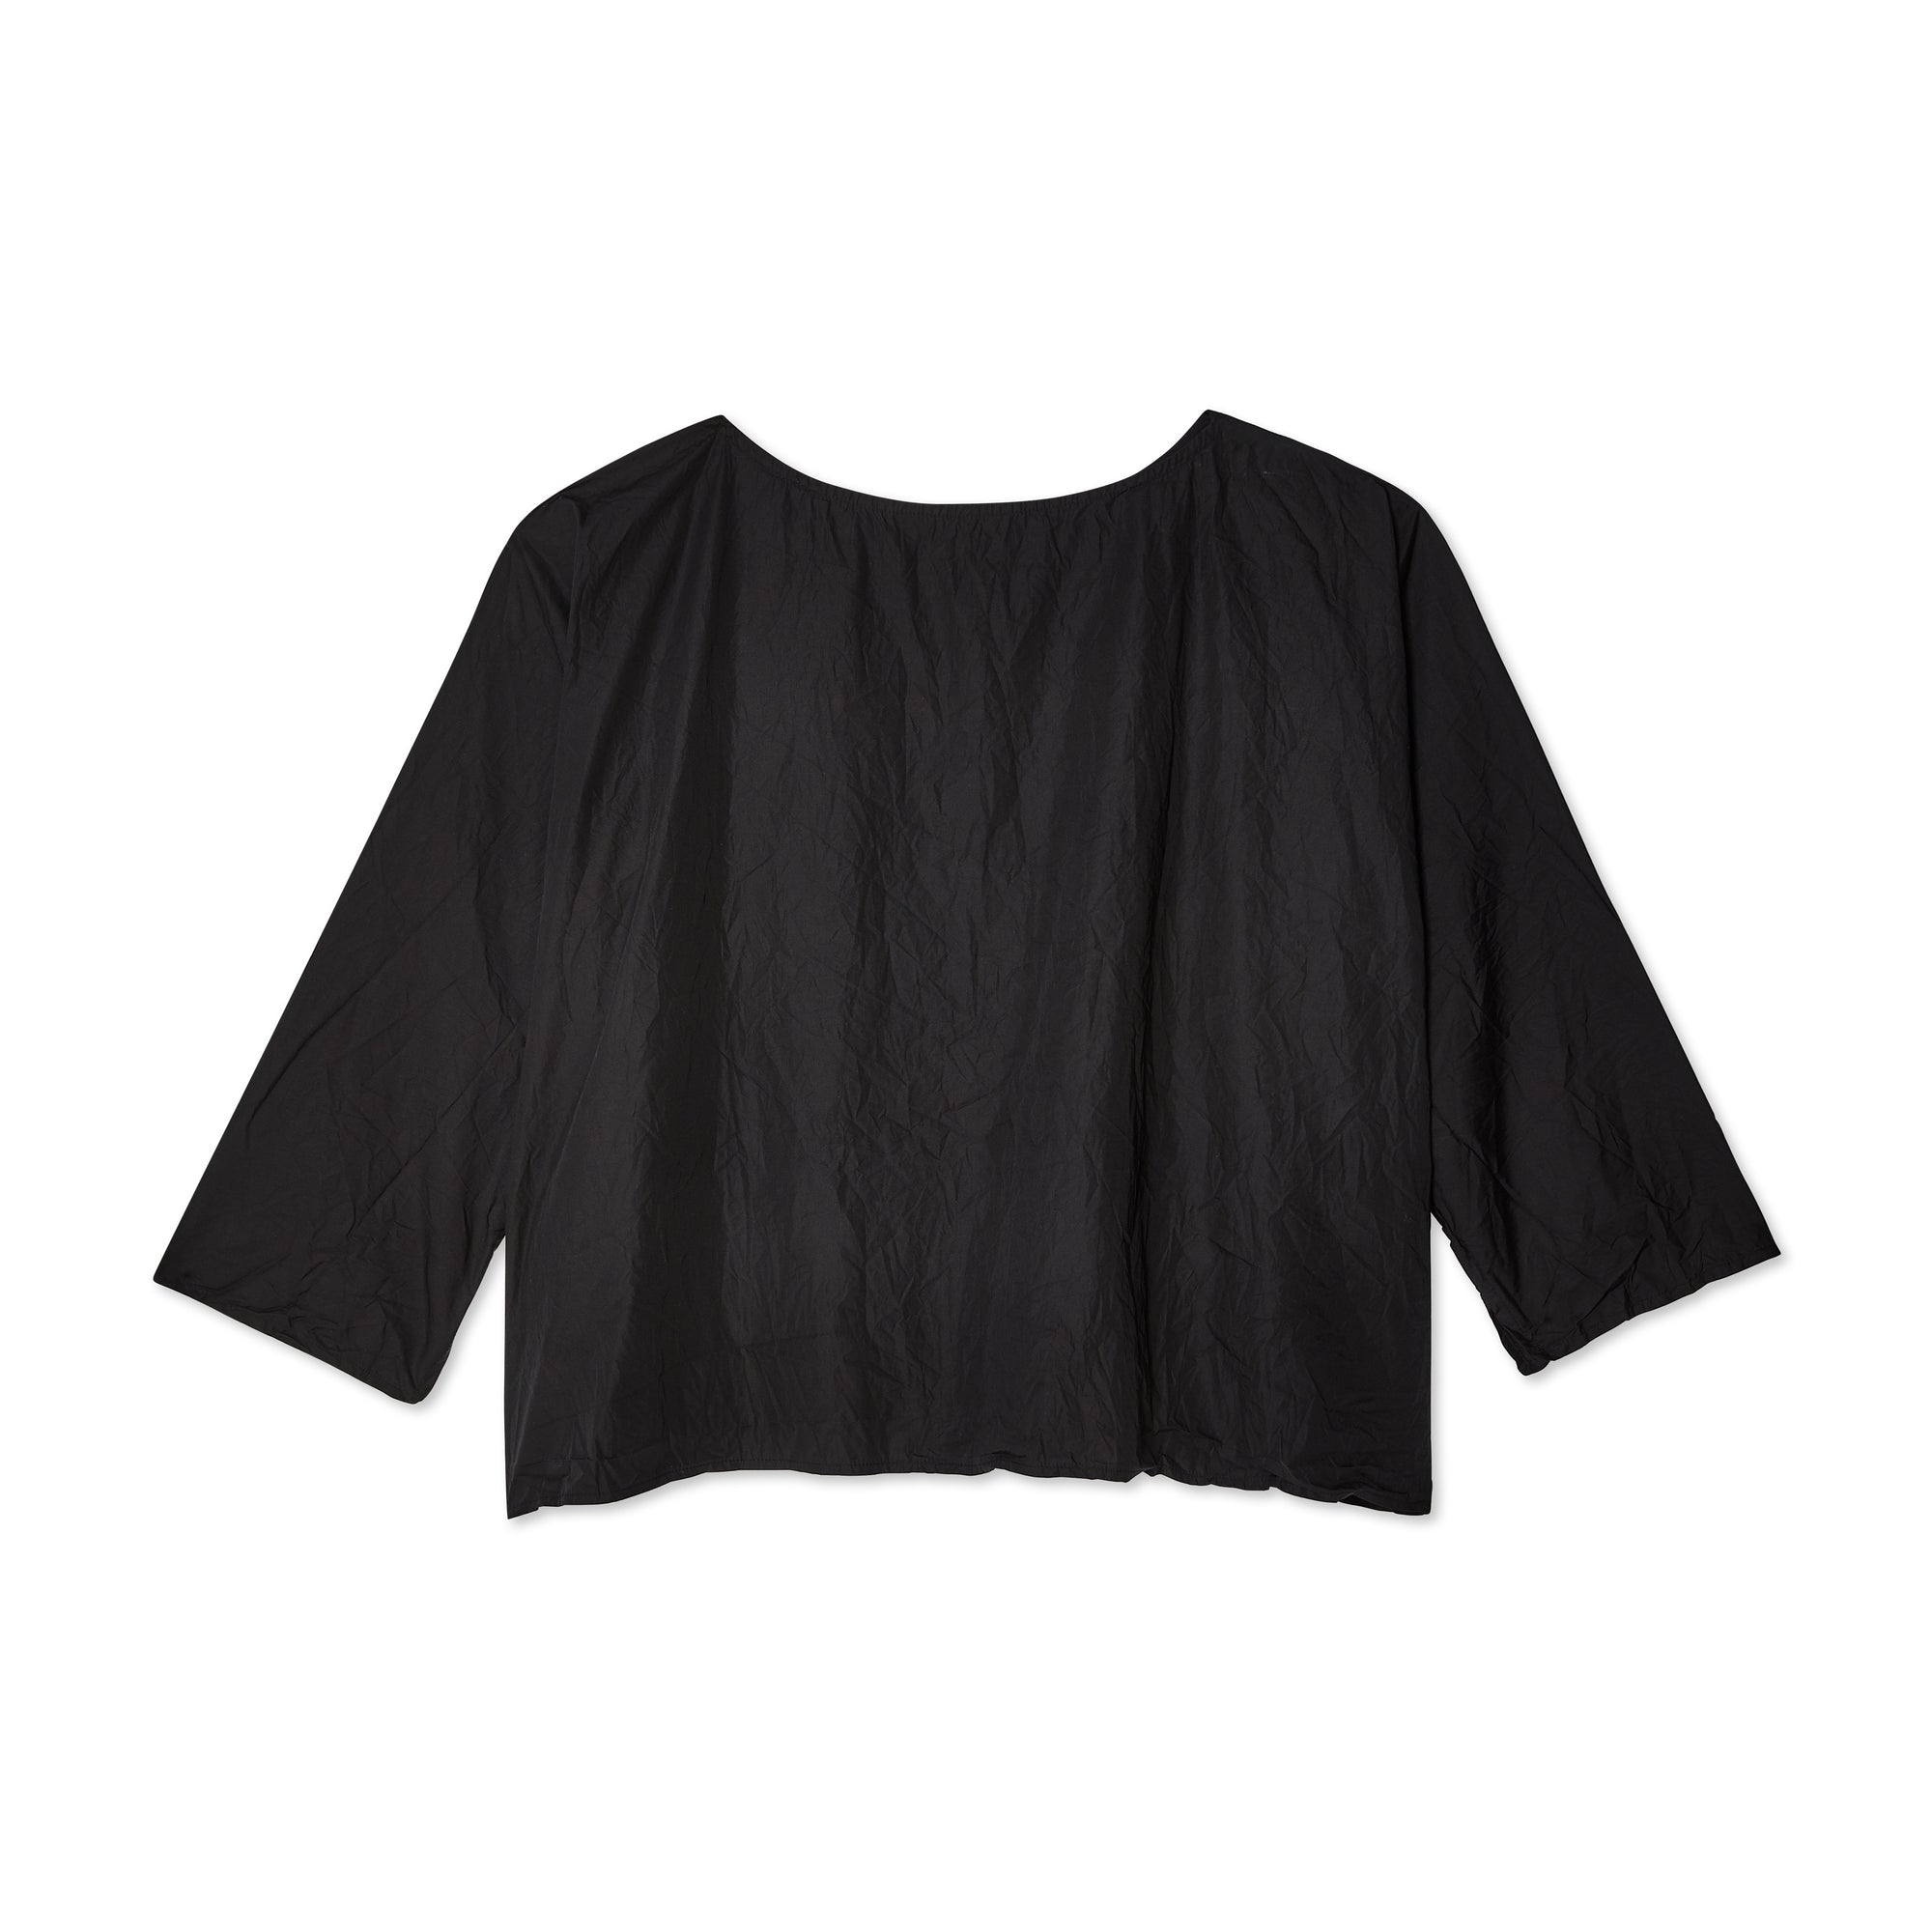 Daniela Gregis - Women’s Camicia Shirt - (Black) view 2